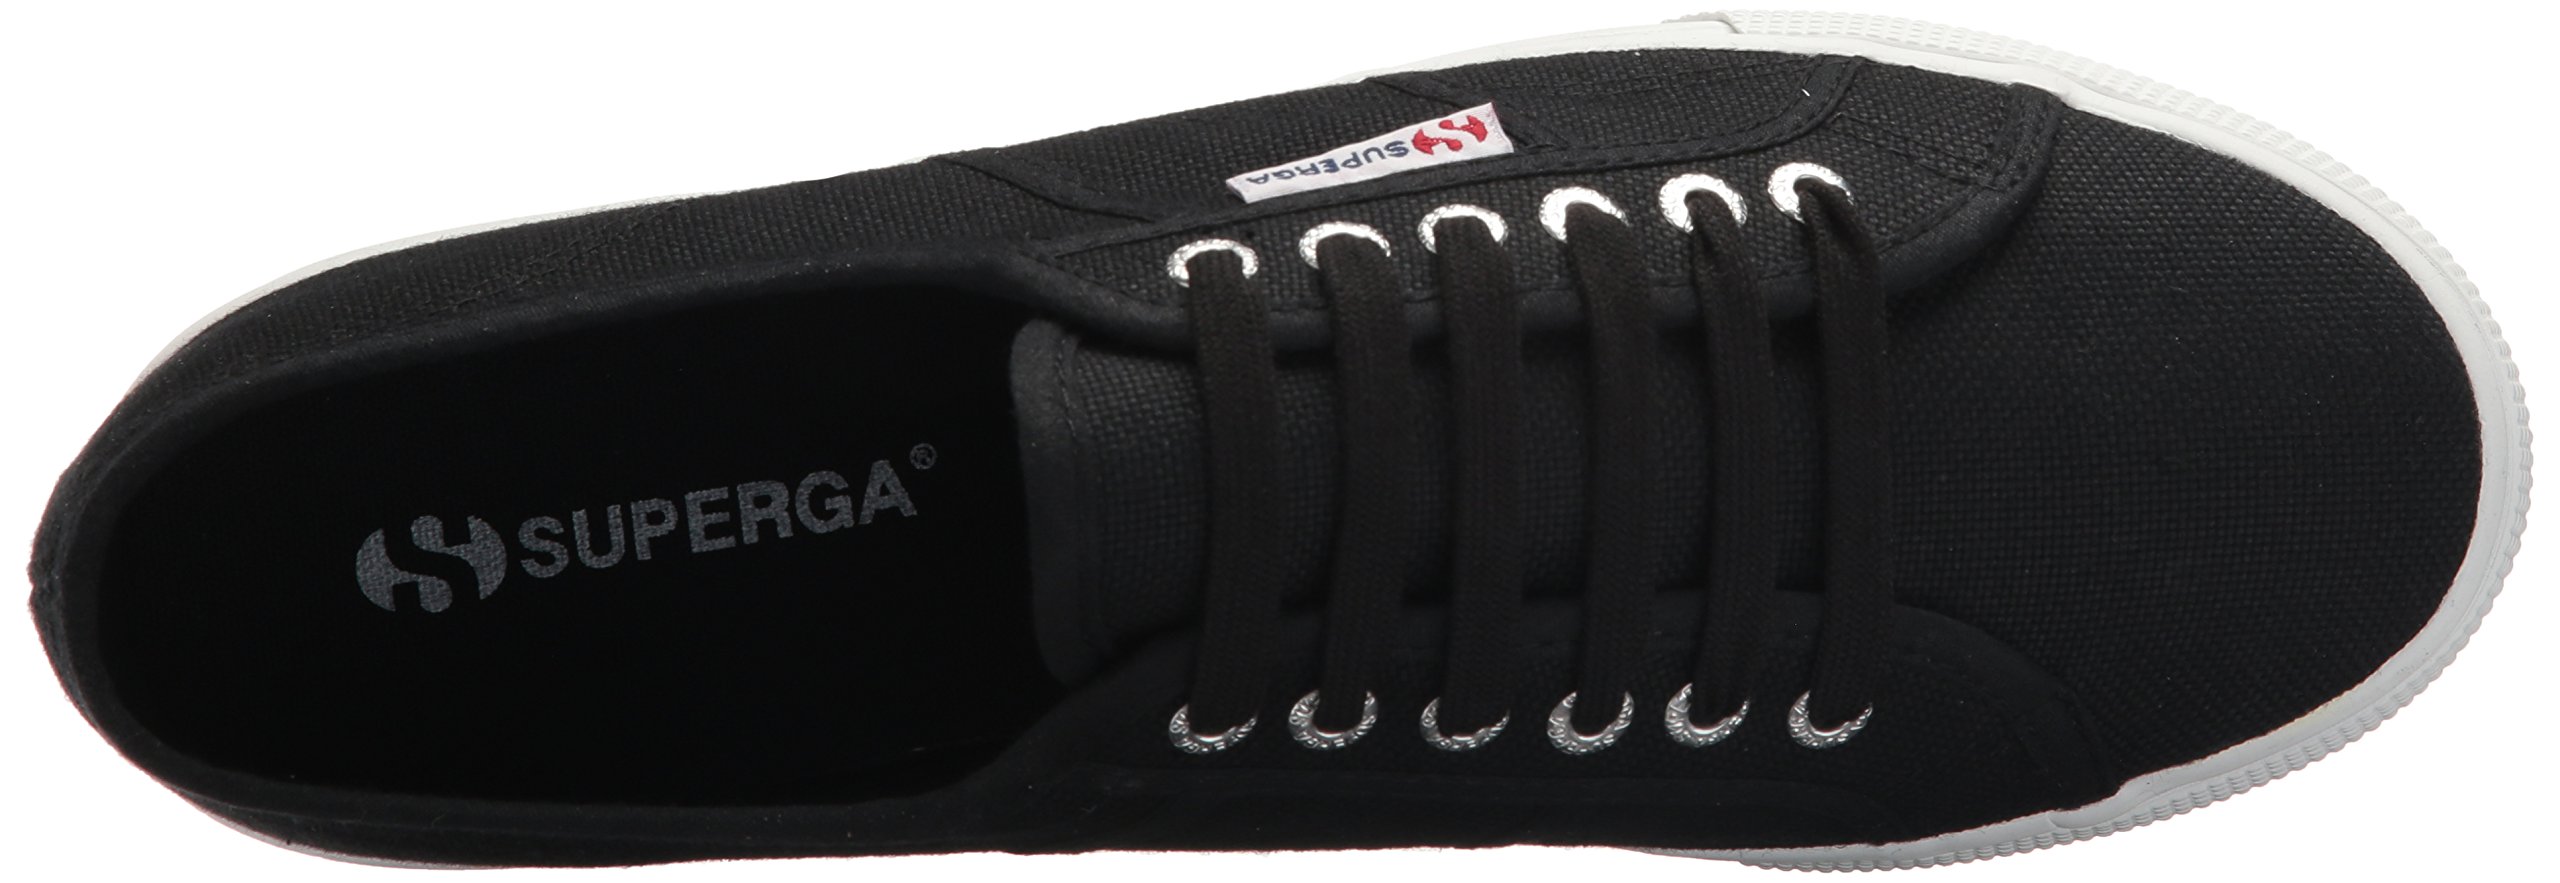 Superga Unisex Low-Top Sneakers